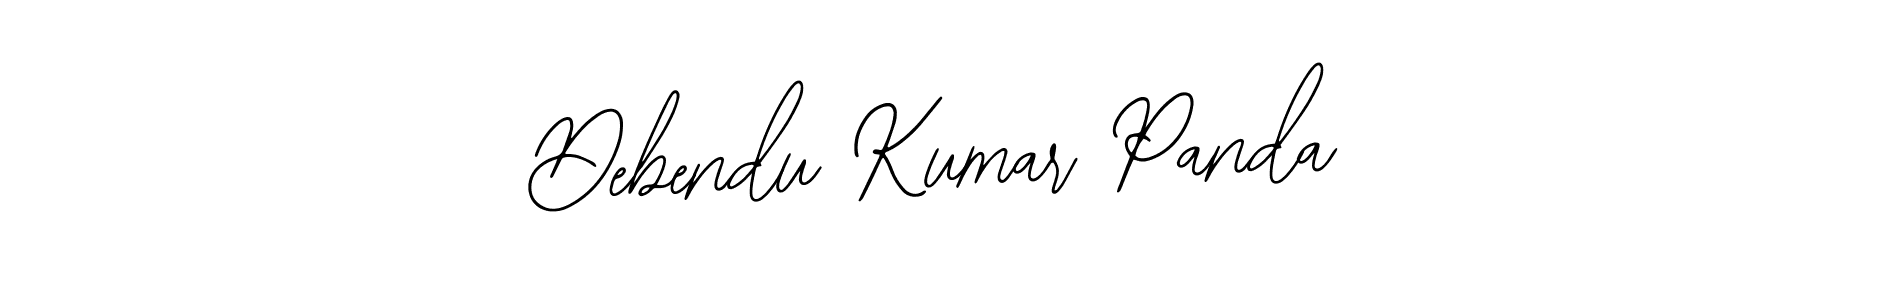 Make a beautiful signature design for name Debendu Kumar Panda. Use this online signature maker to create a handwritten signature for free. Debendu Kumar Panda signature style 12 images and pictures png